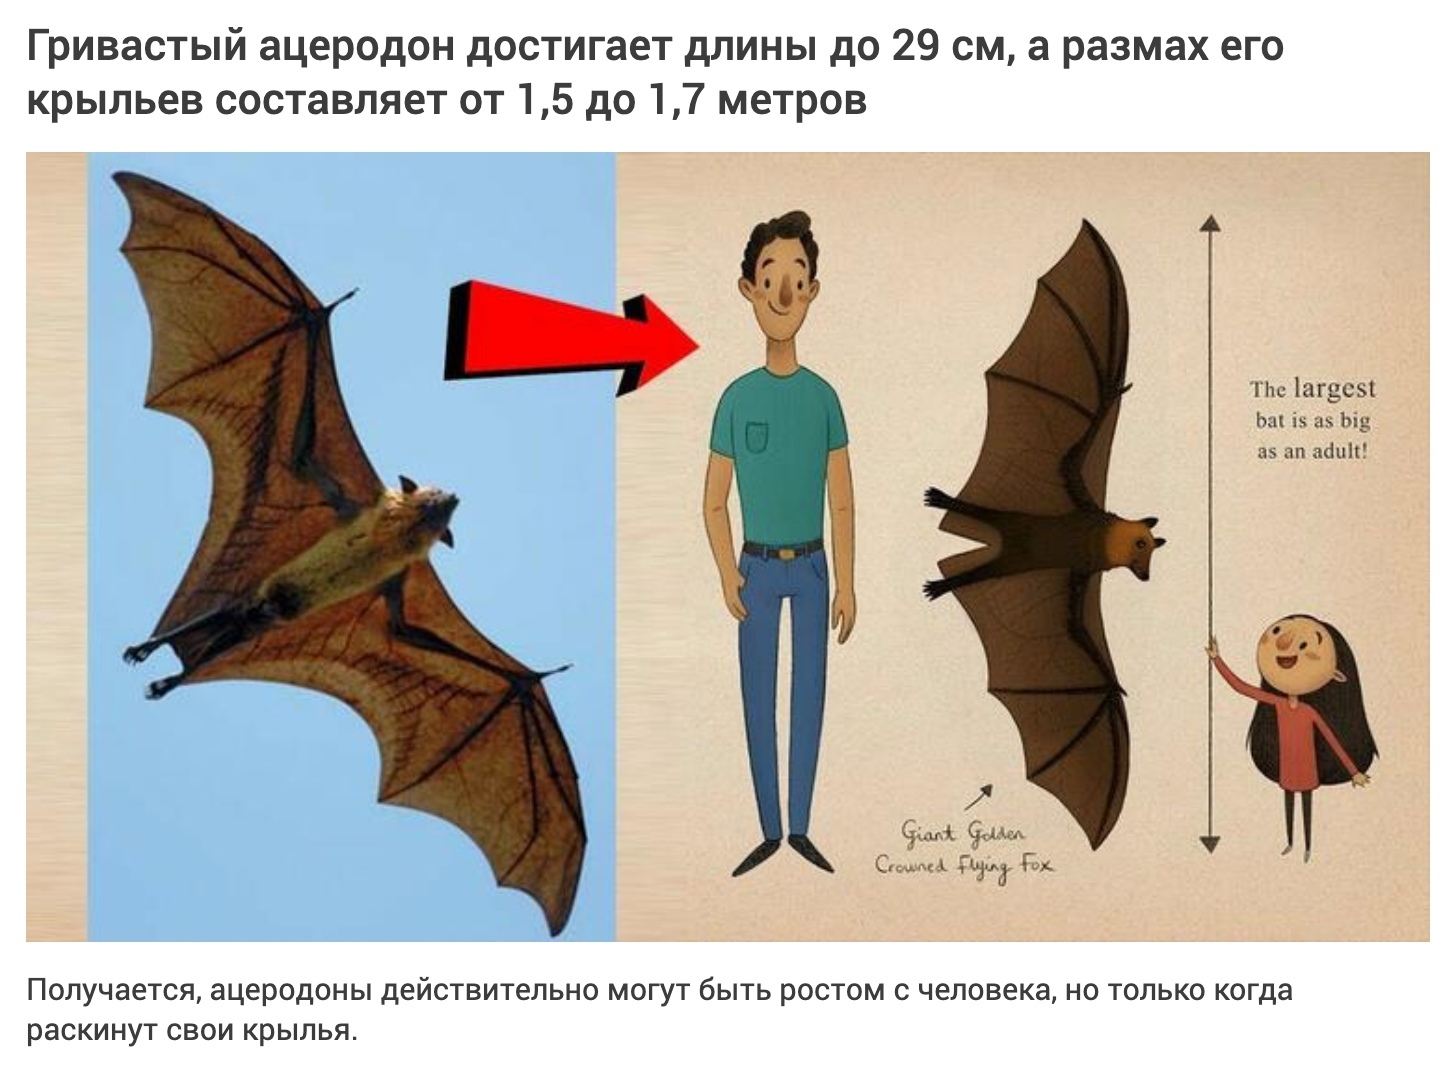 Maned Acerodon - Bat, Bats, Longpost